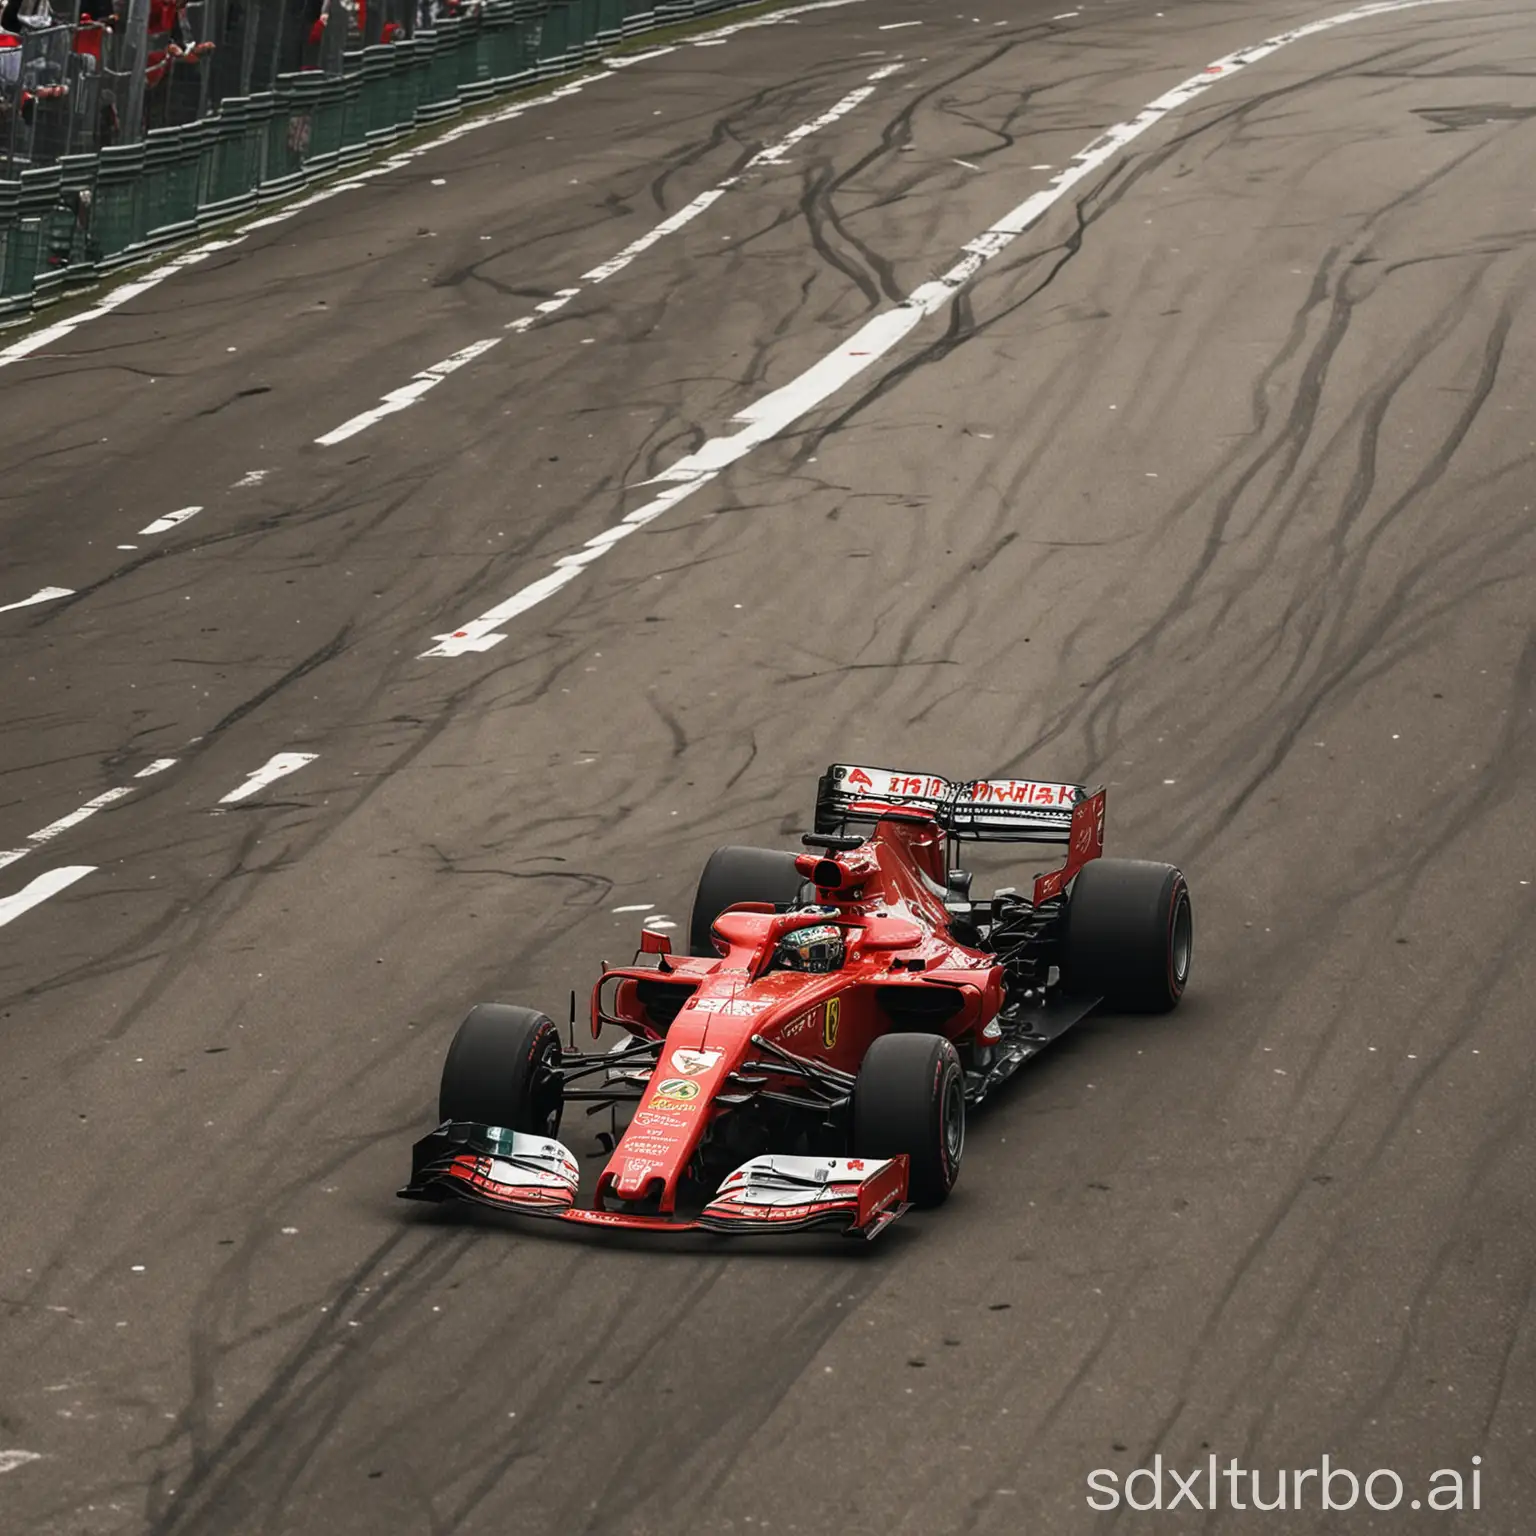 Lewis Hamilton winning Monza in a ferrari